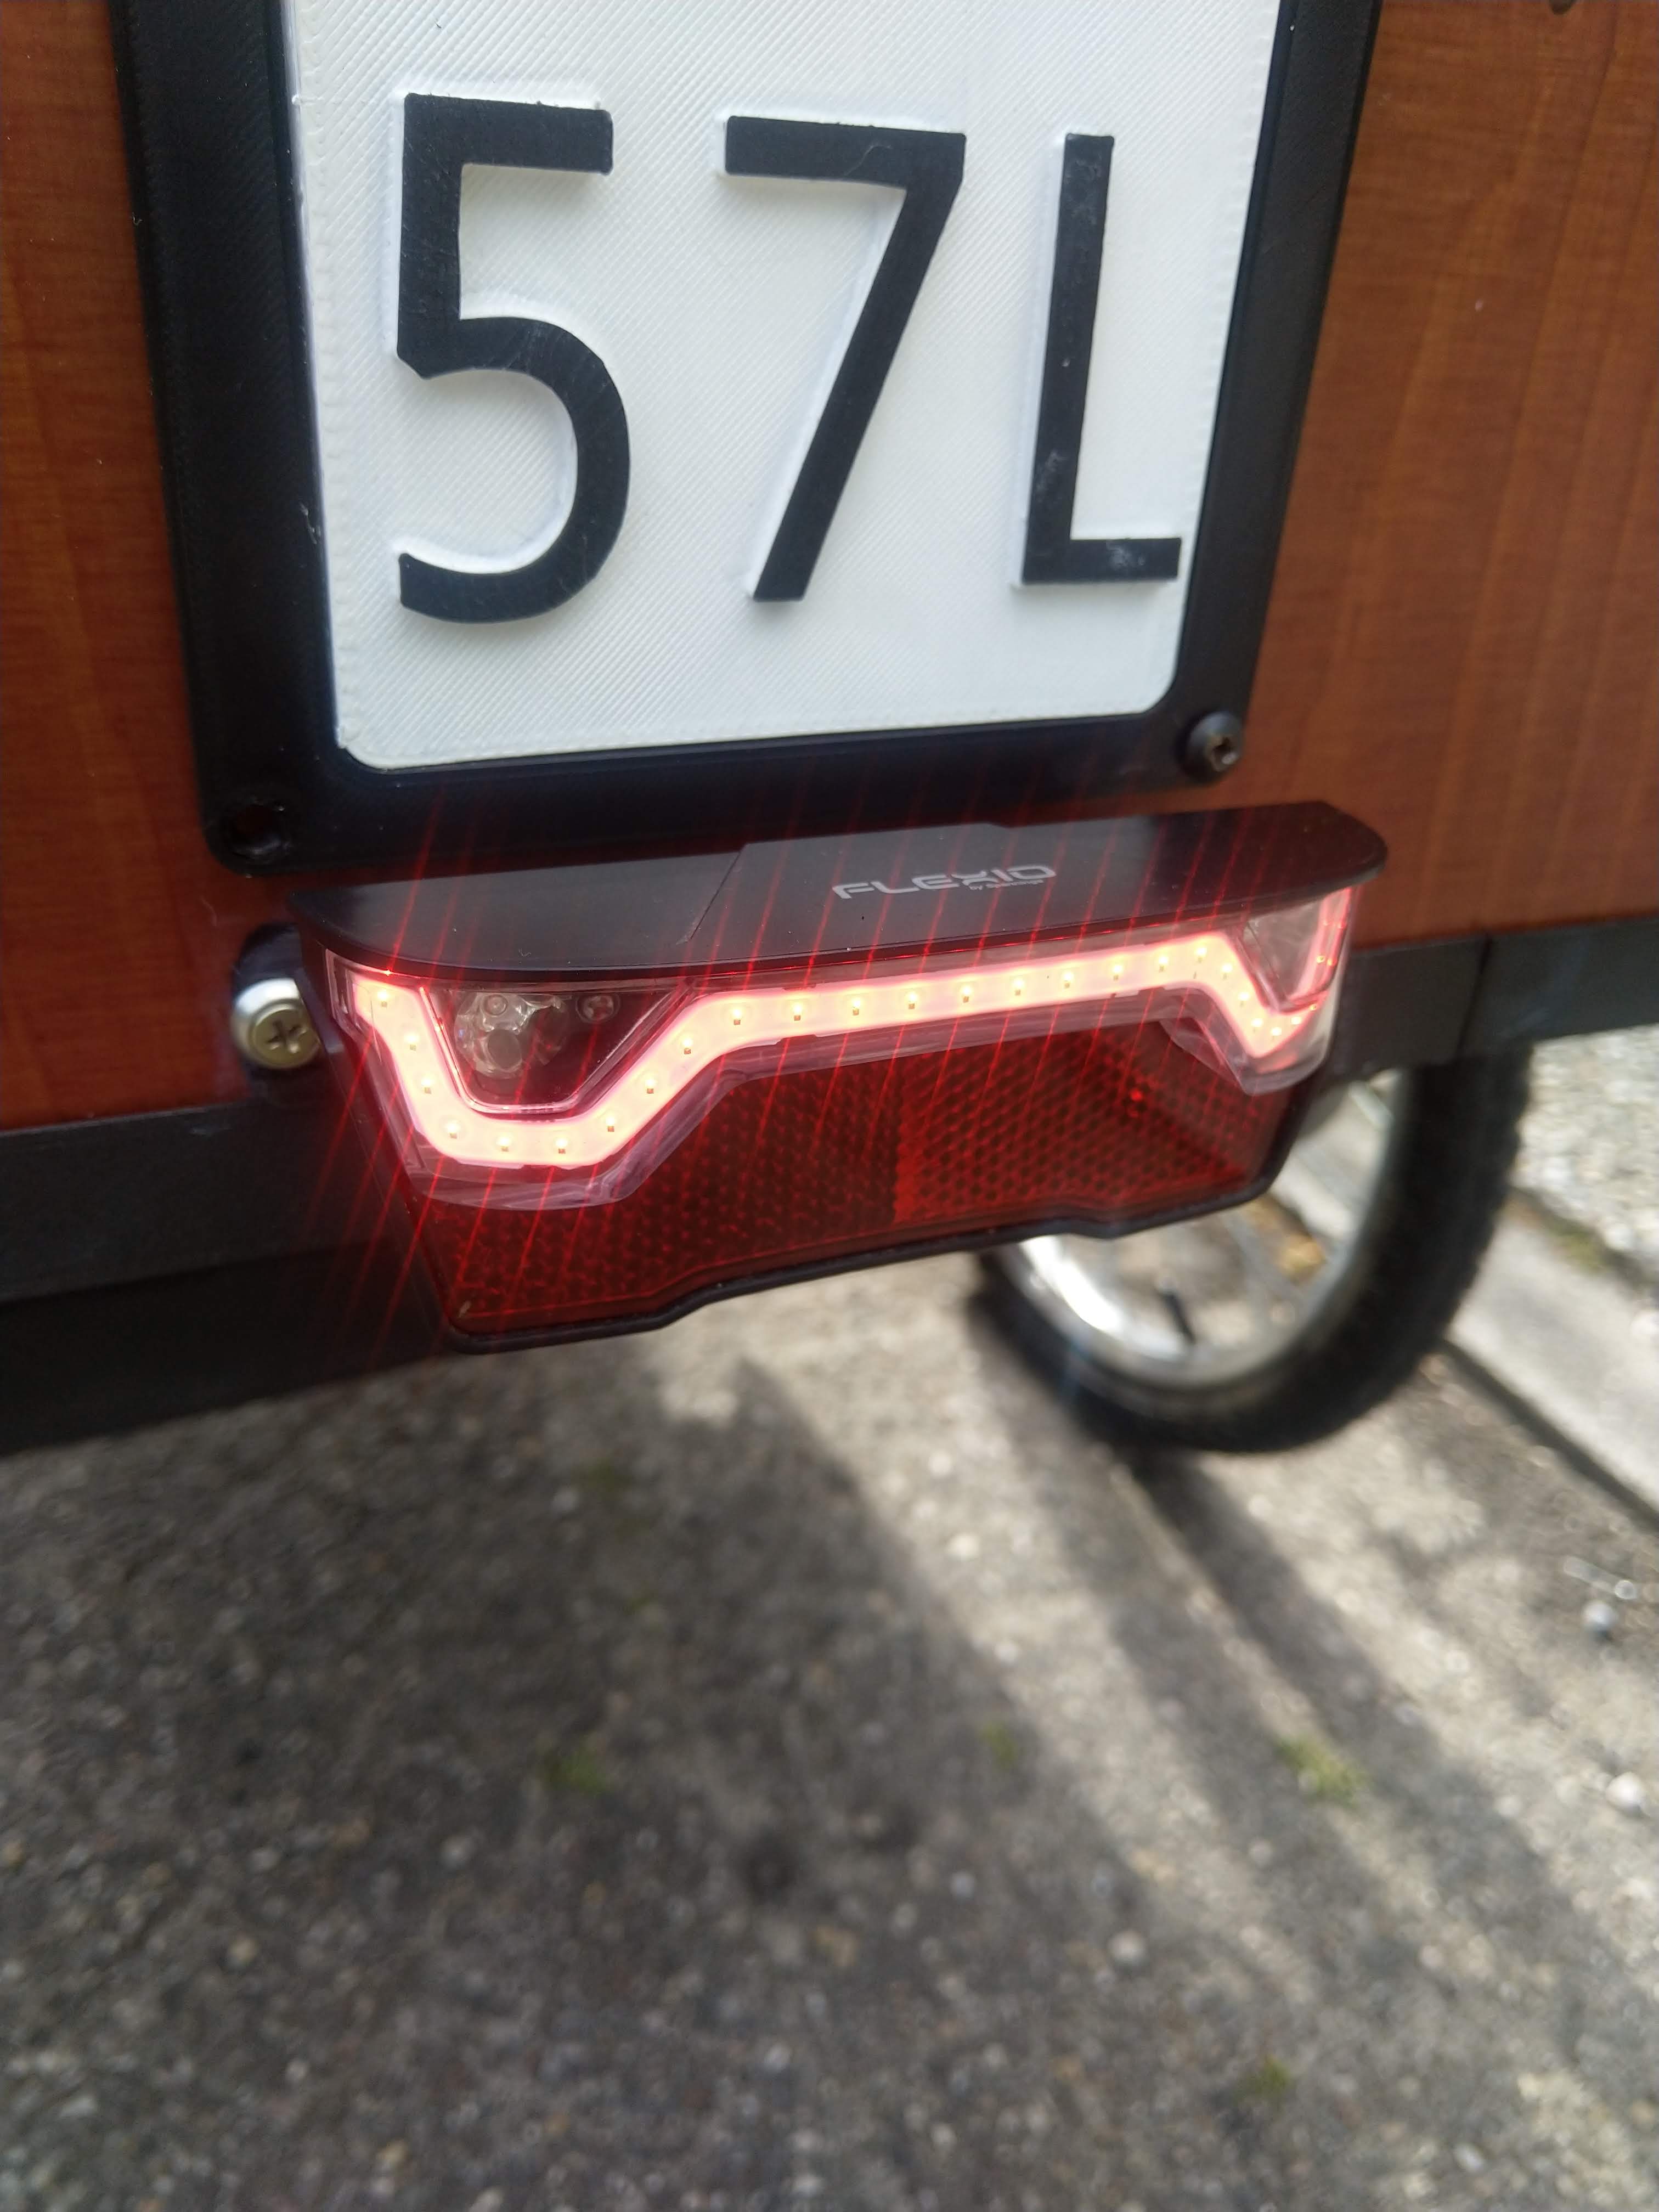 Bicycle trailer rear light holder